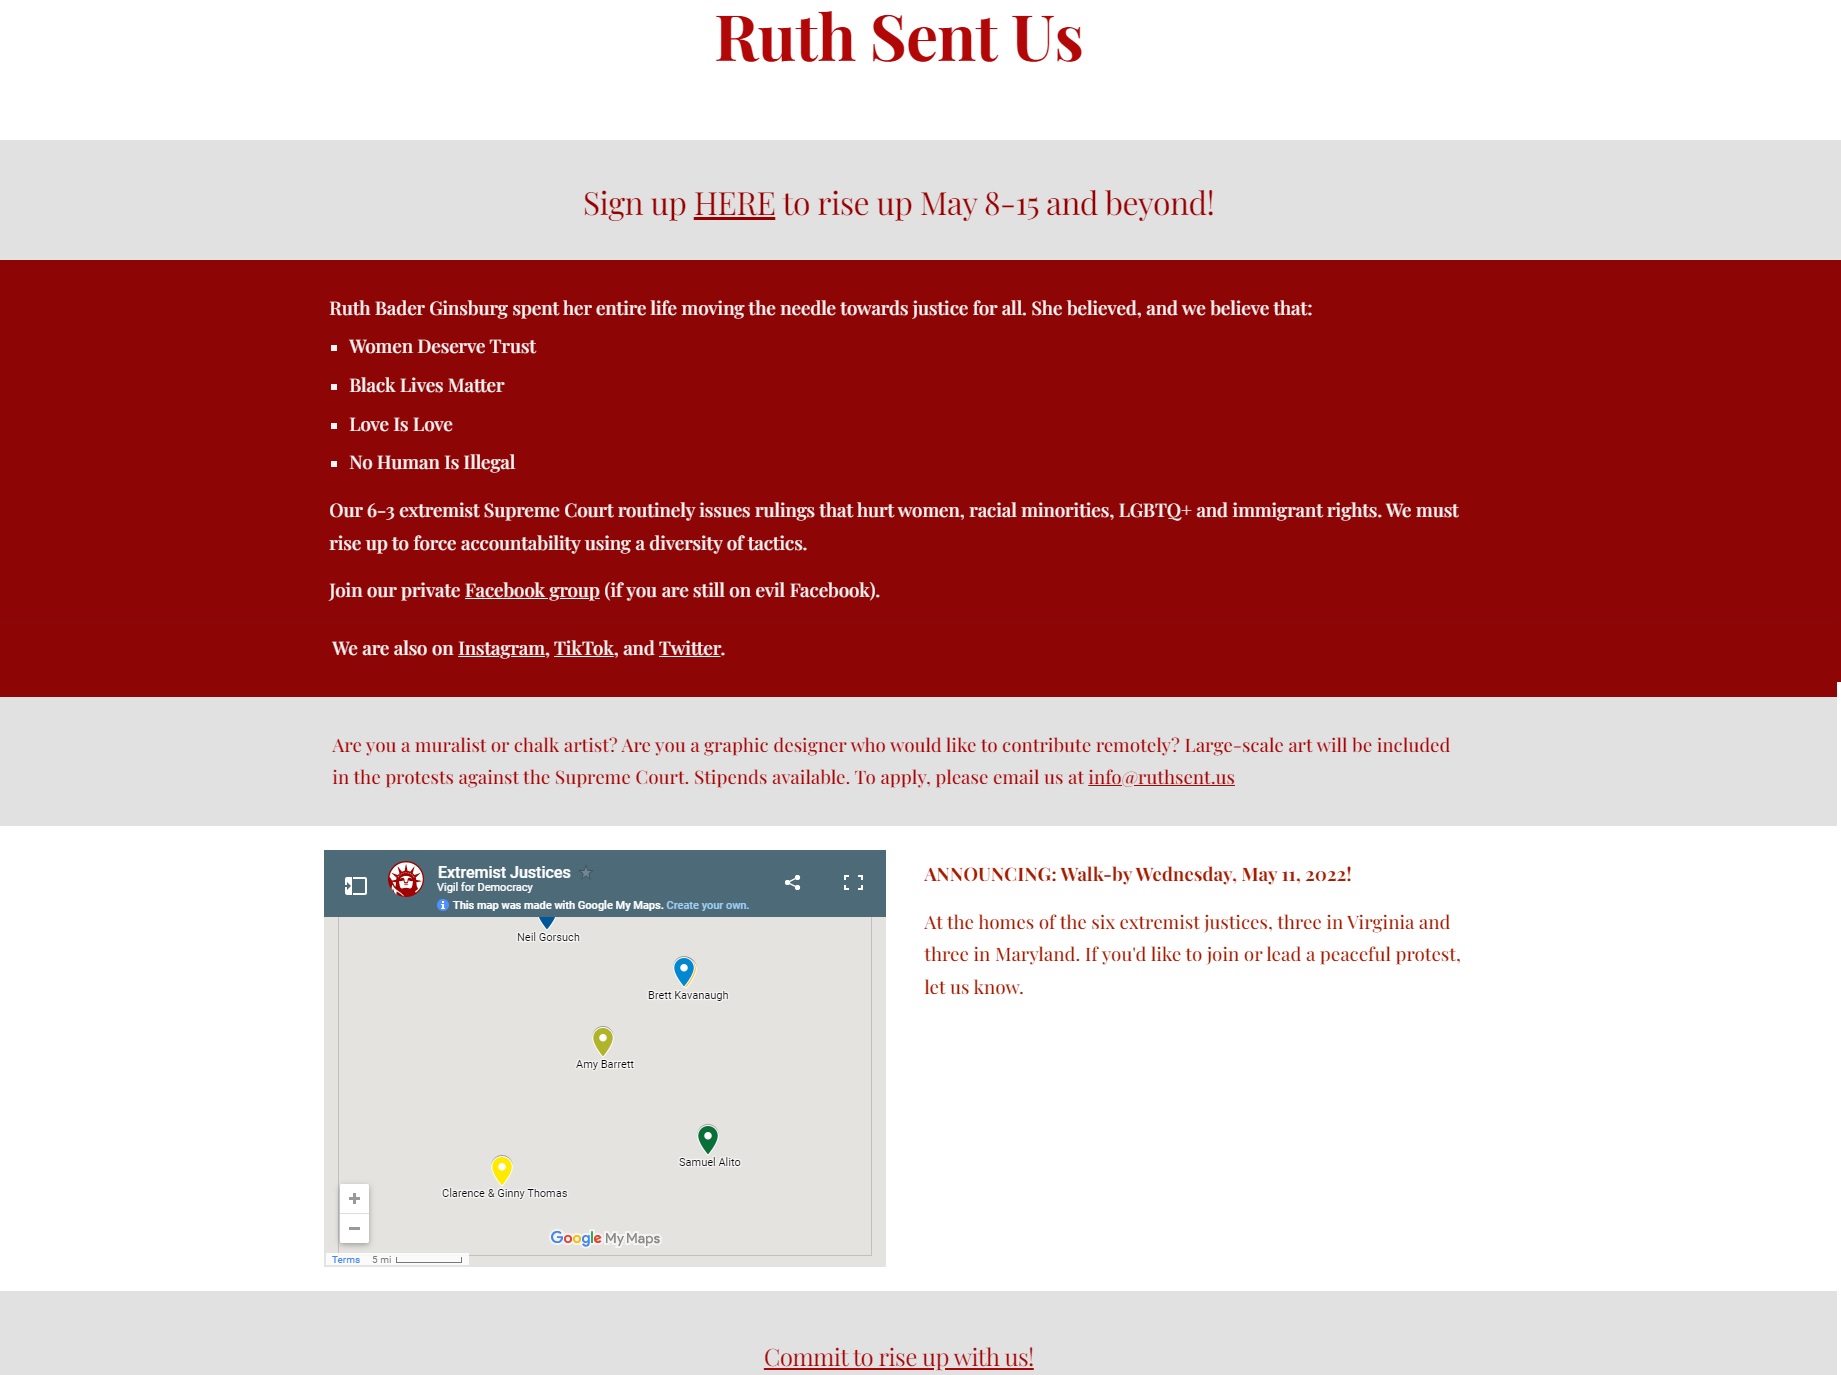 RuthSentUs claims SCOTUS addresses online see WBM ruthsentus forward home